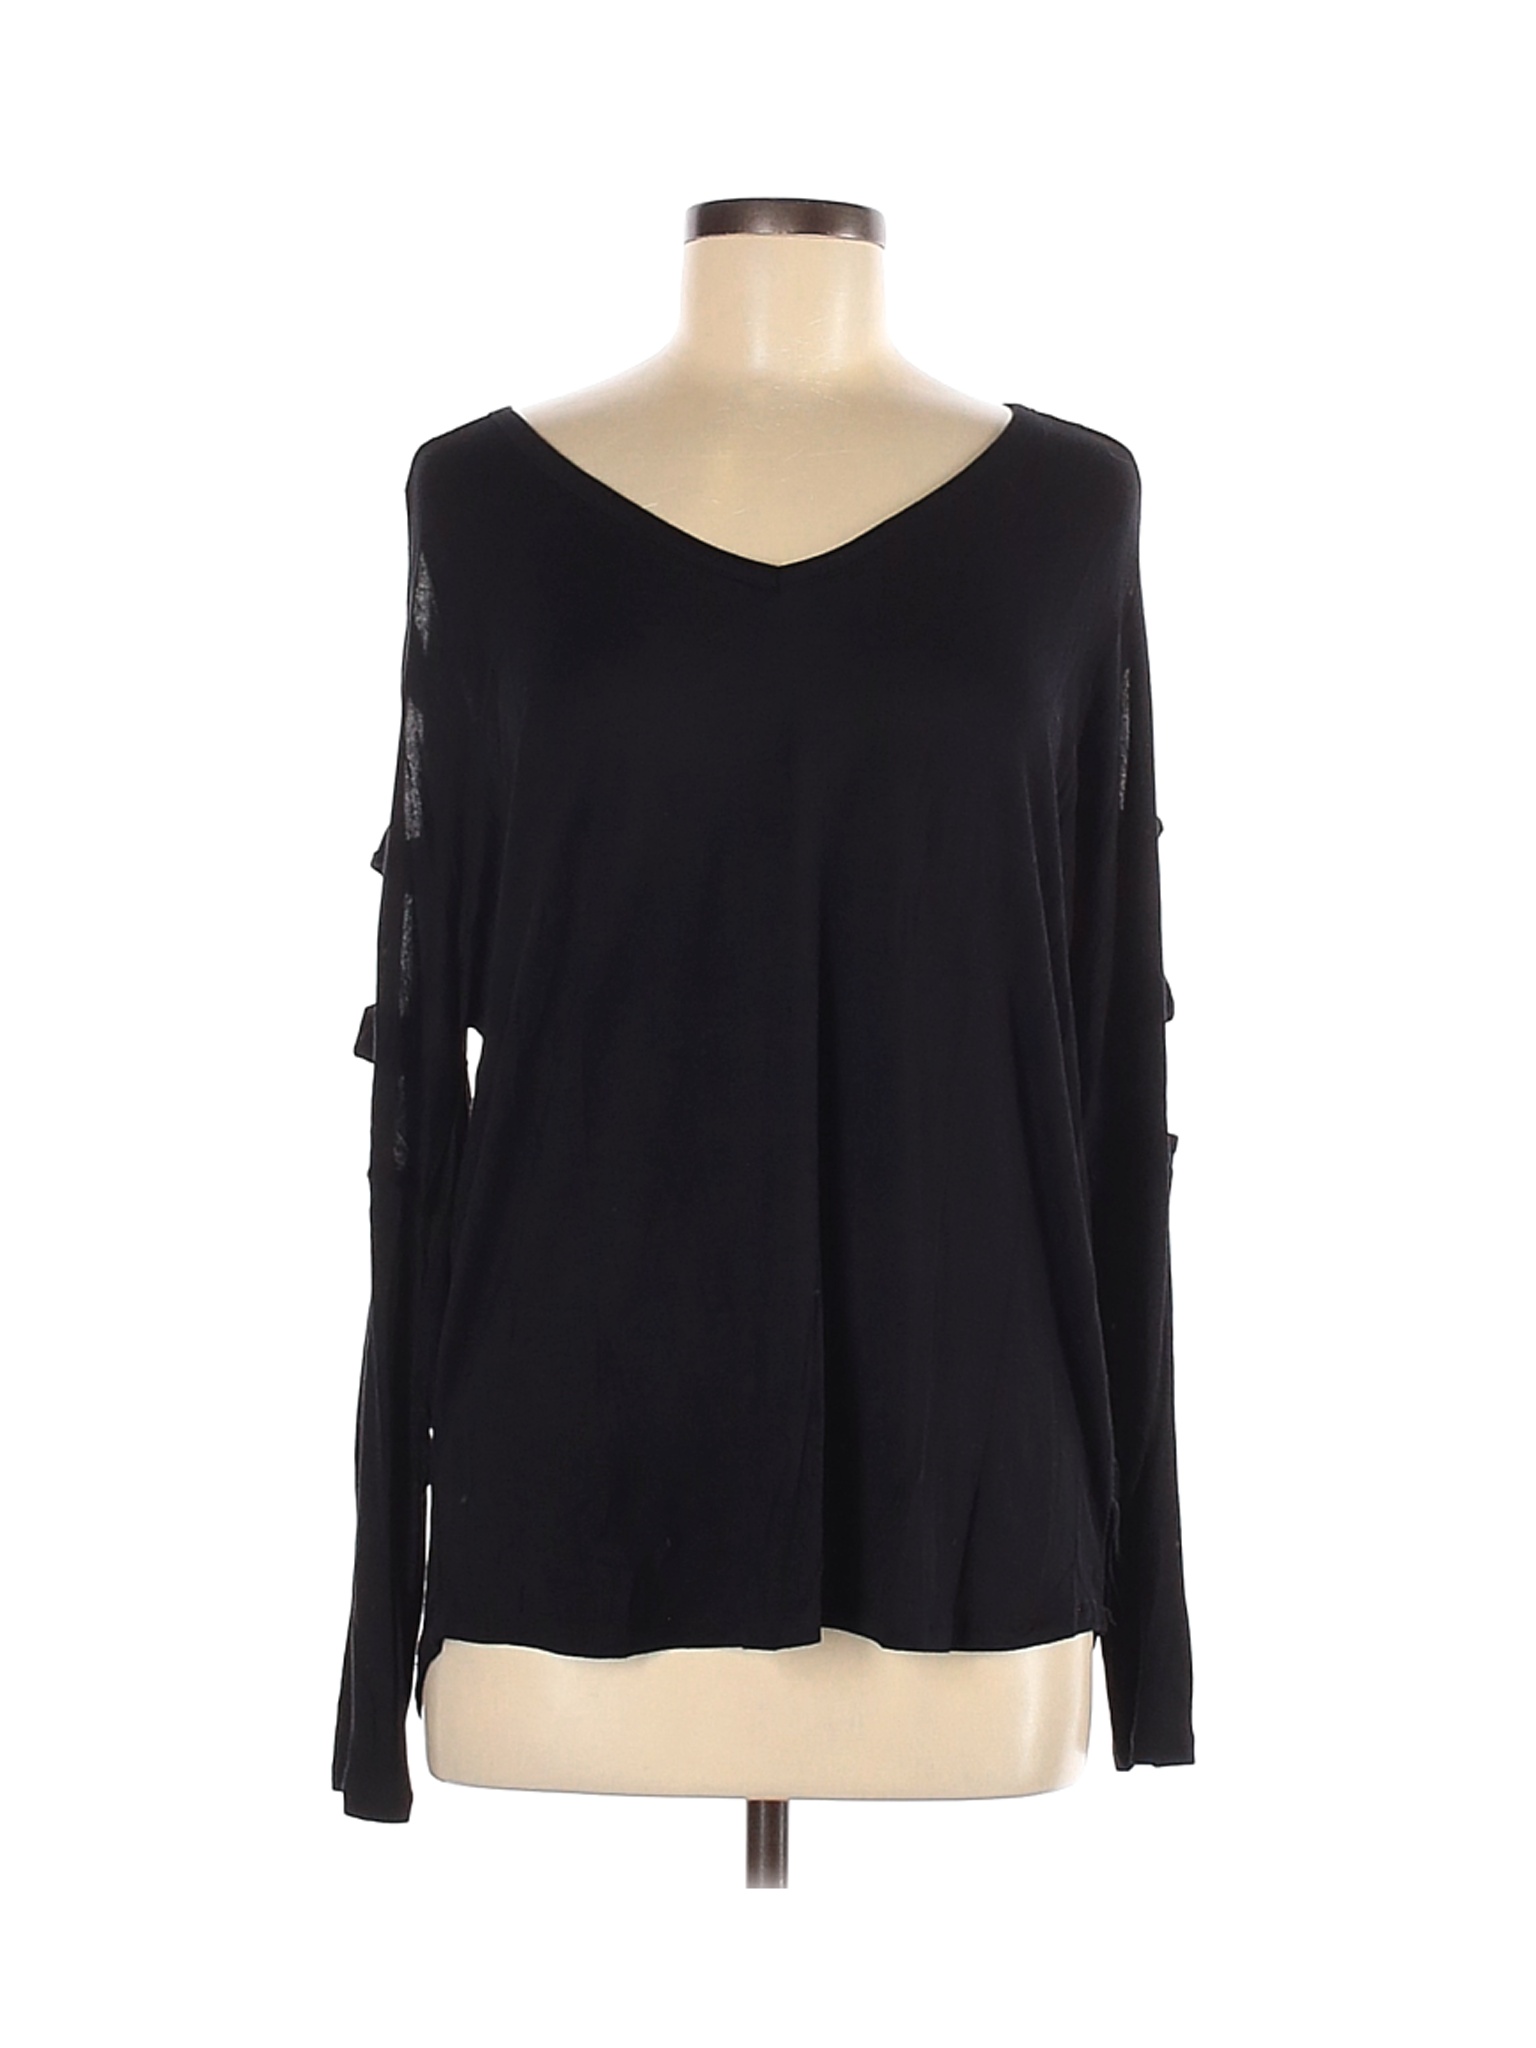 Zenana Outfitters Women Black Long Sleeve Top M | eBay